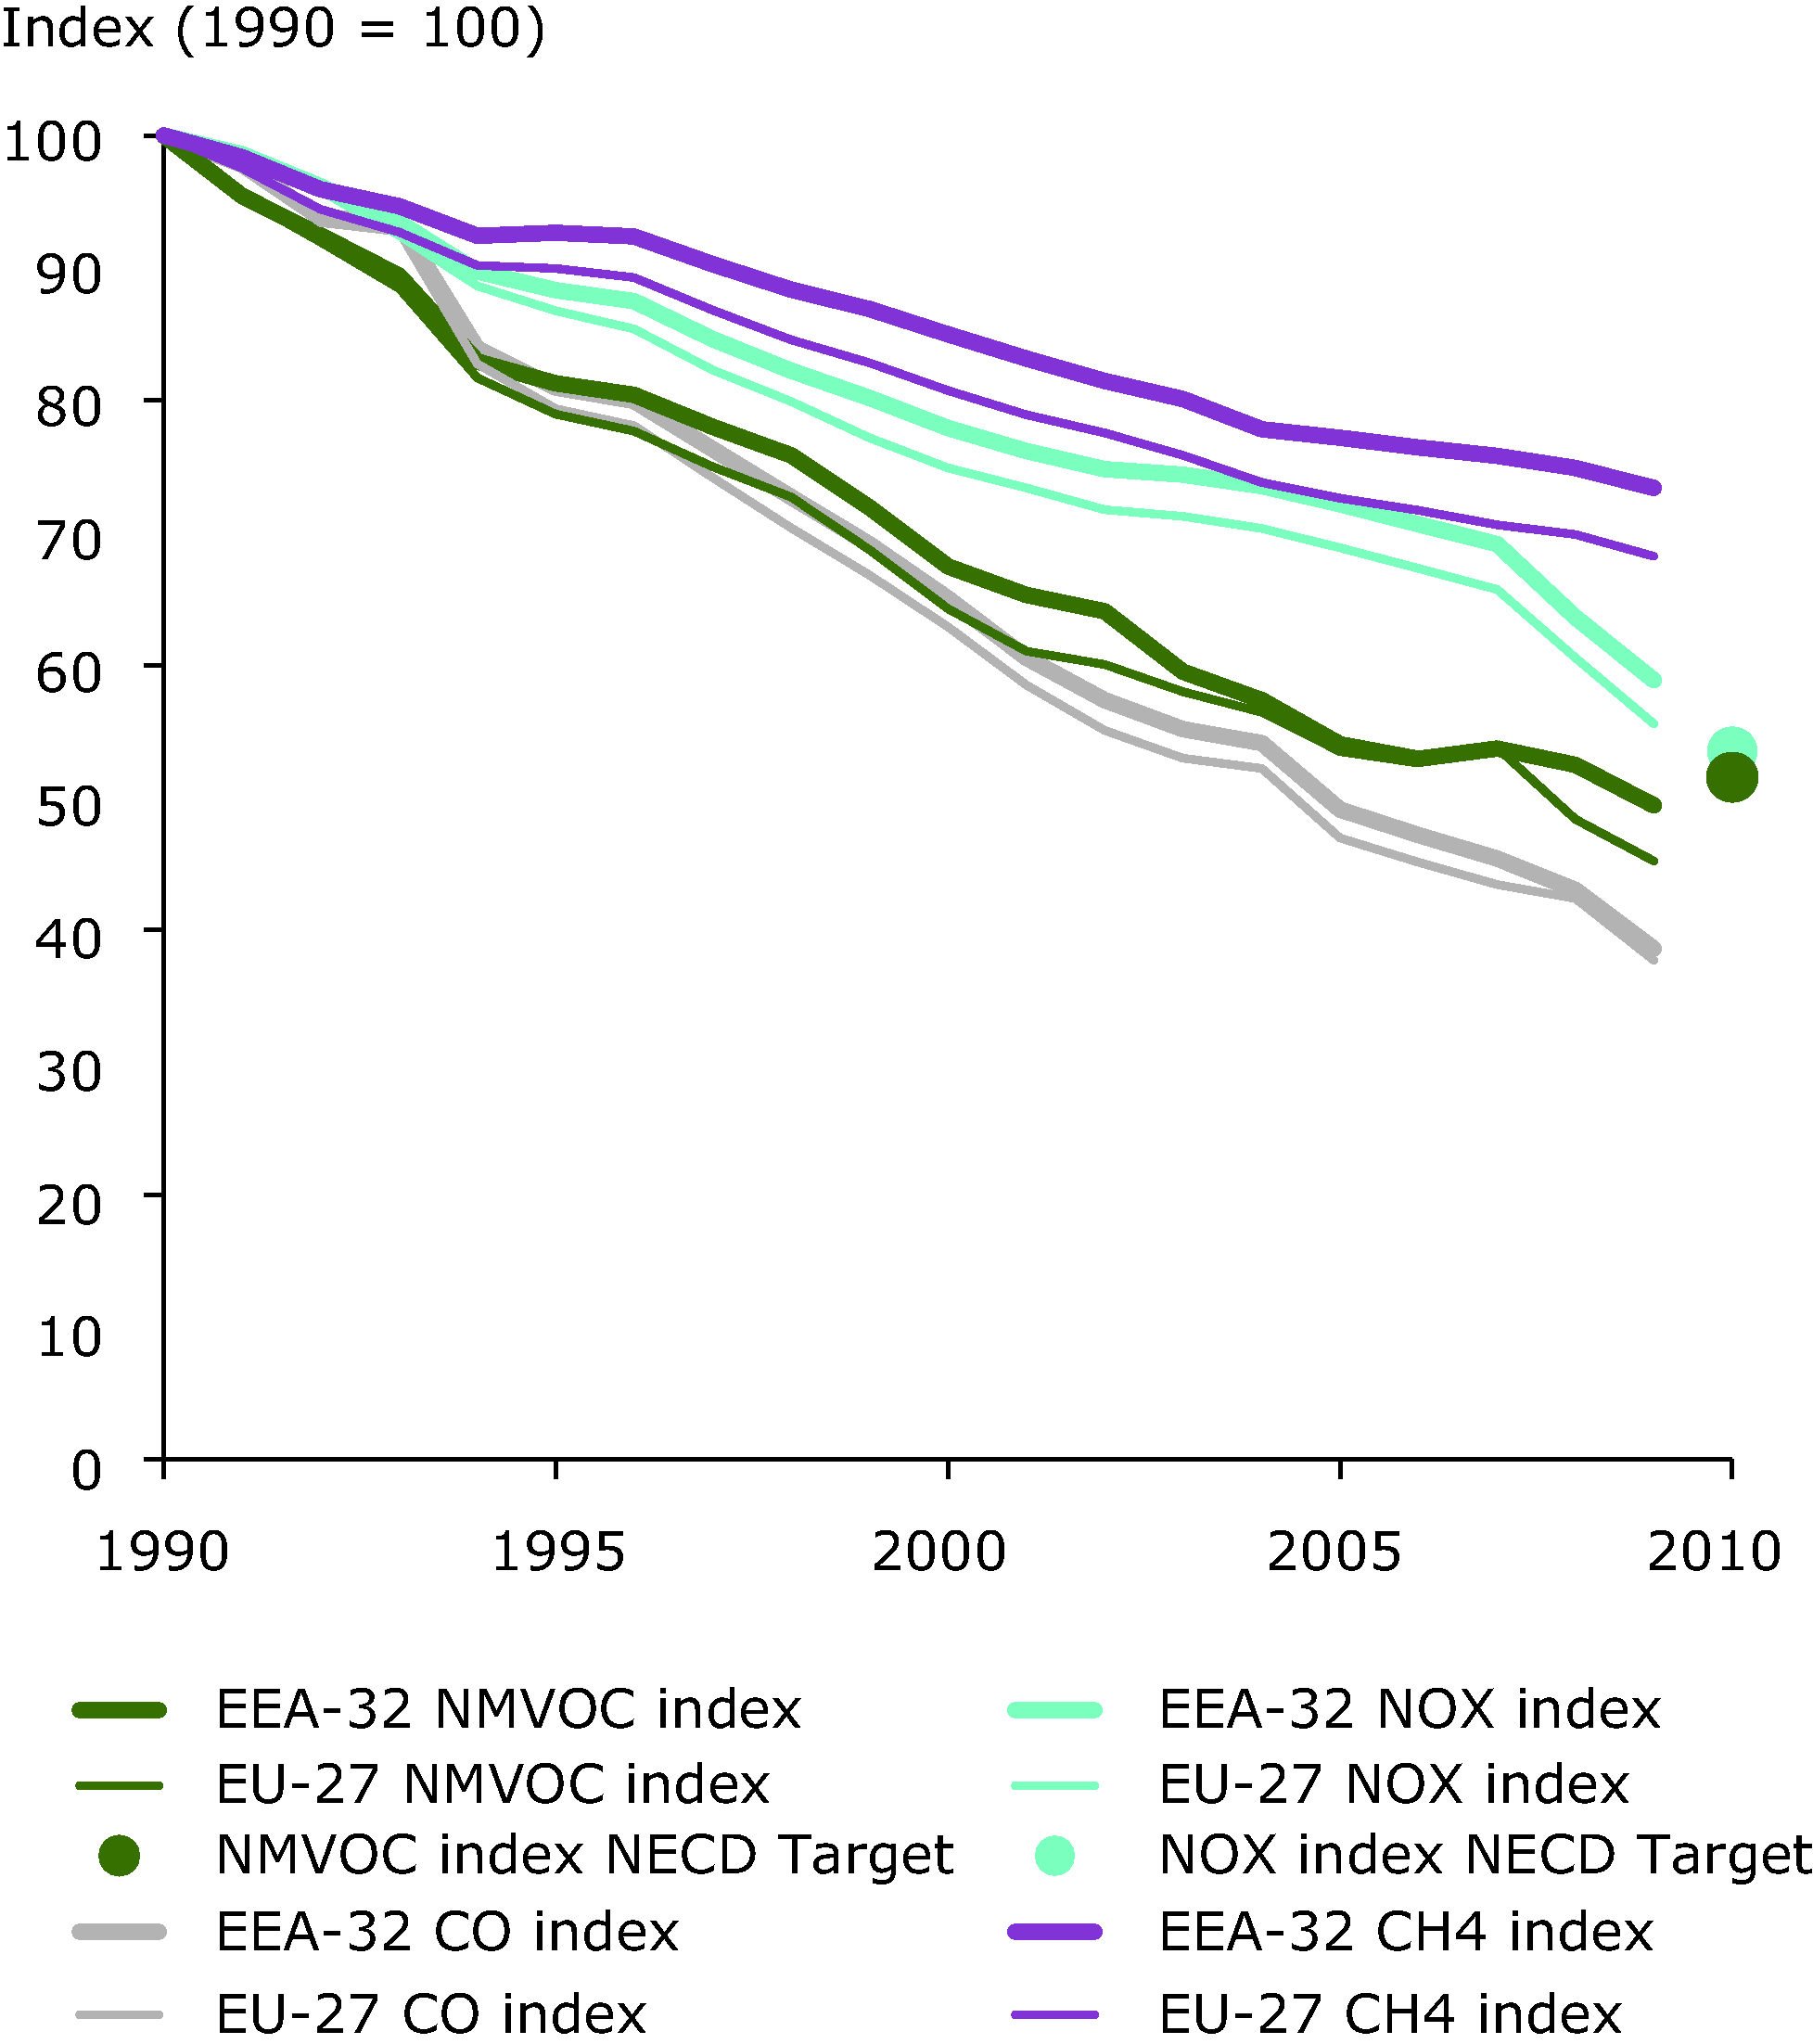 Emission trends of ozone-precursor pollutants (EEA member countries, EU-27)